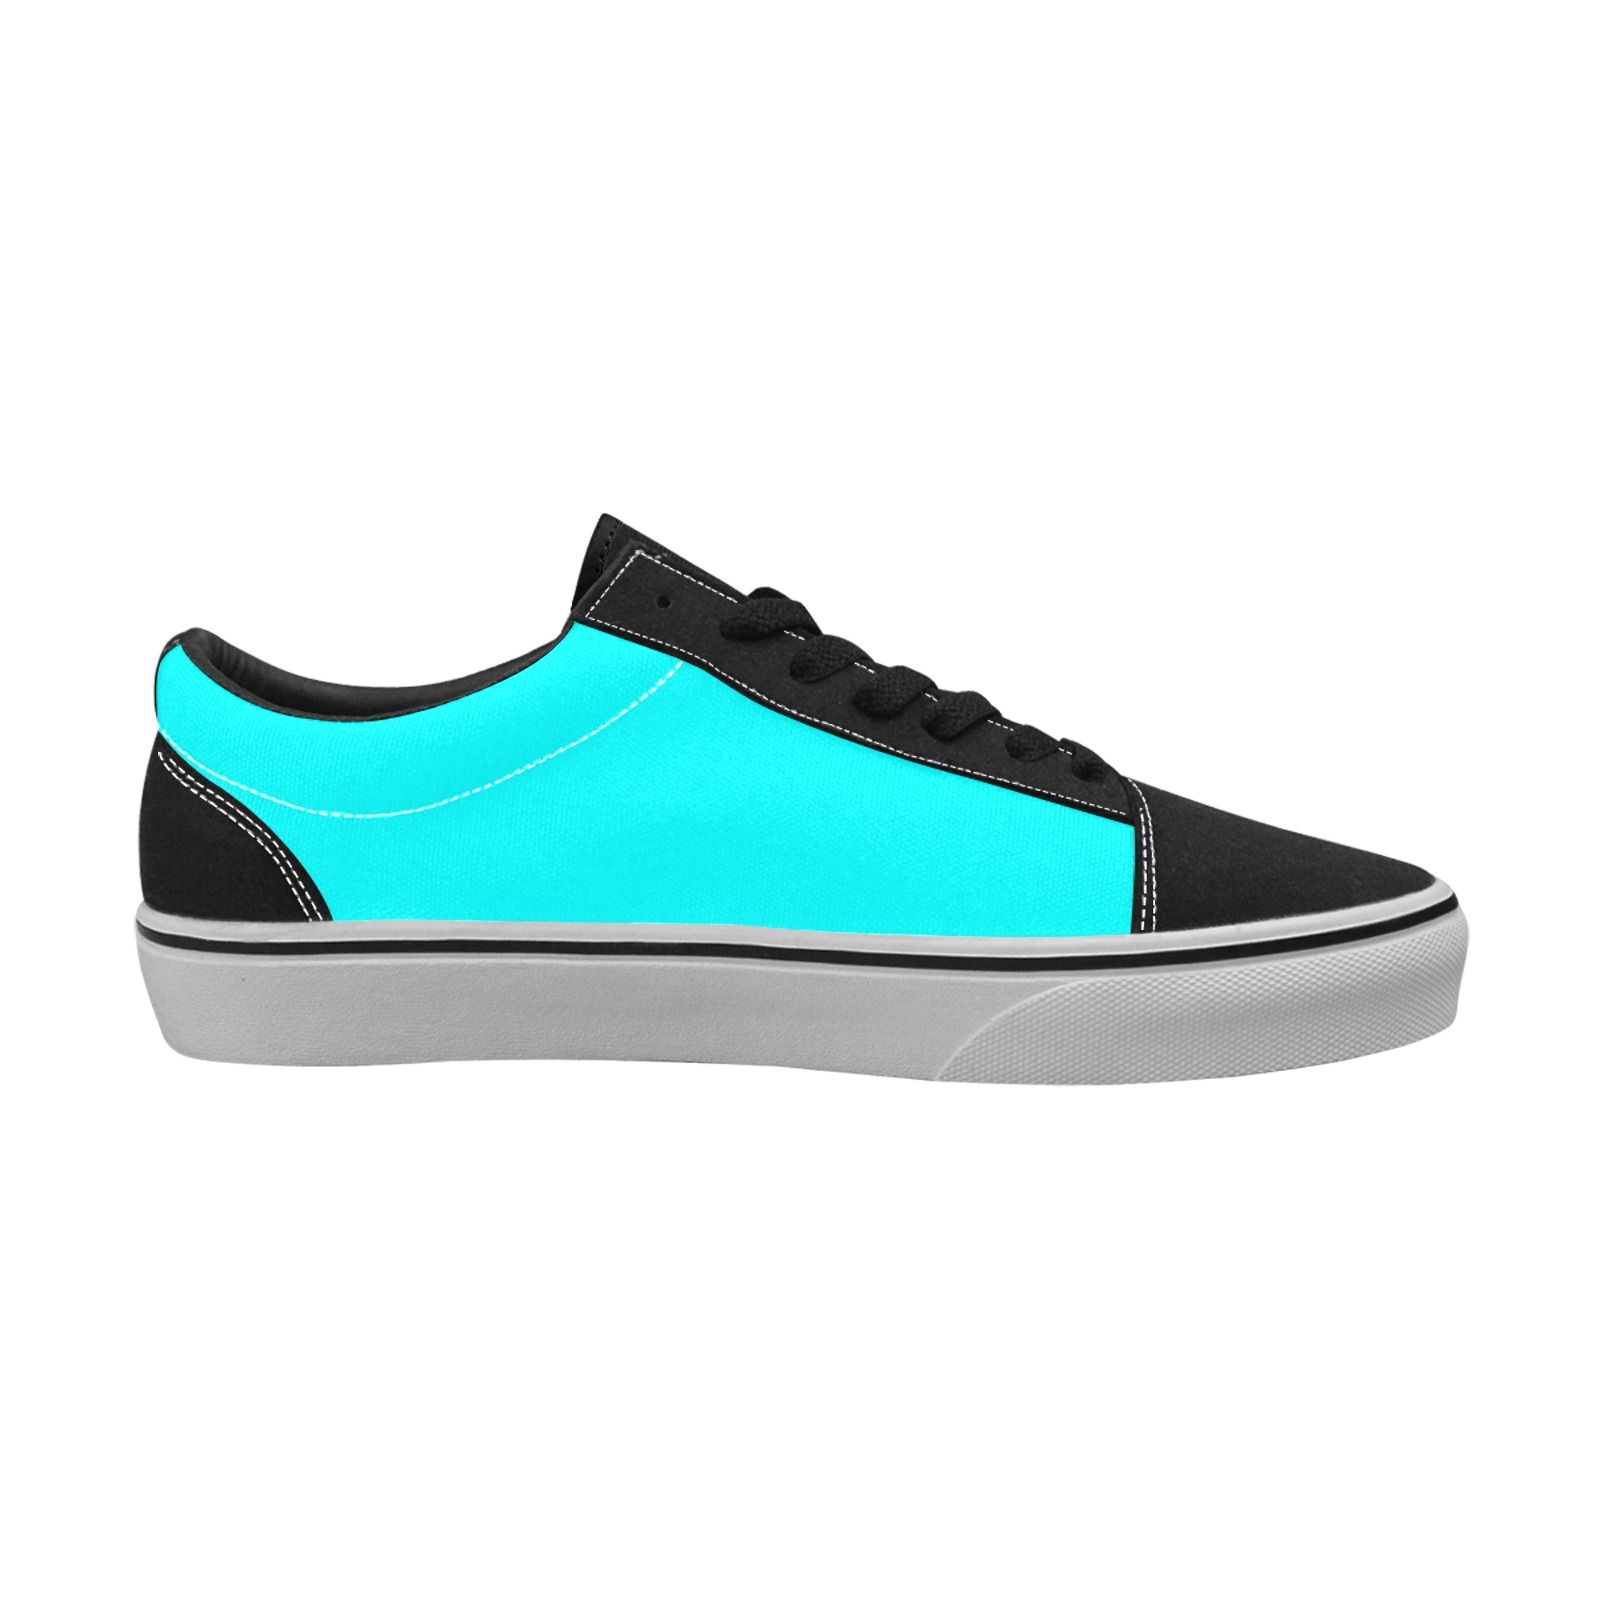 color aqua / cyan Men's Low Top Skateboarding Shoes (Model E001-2)